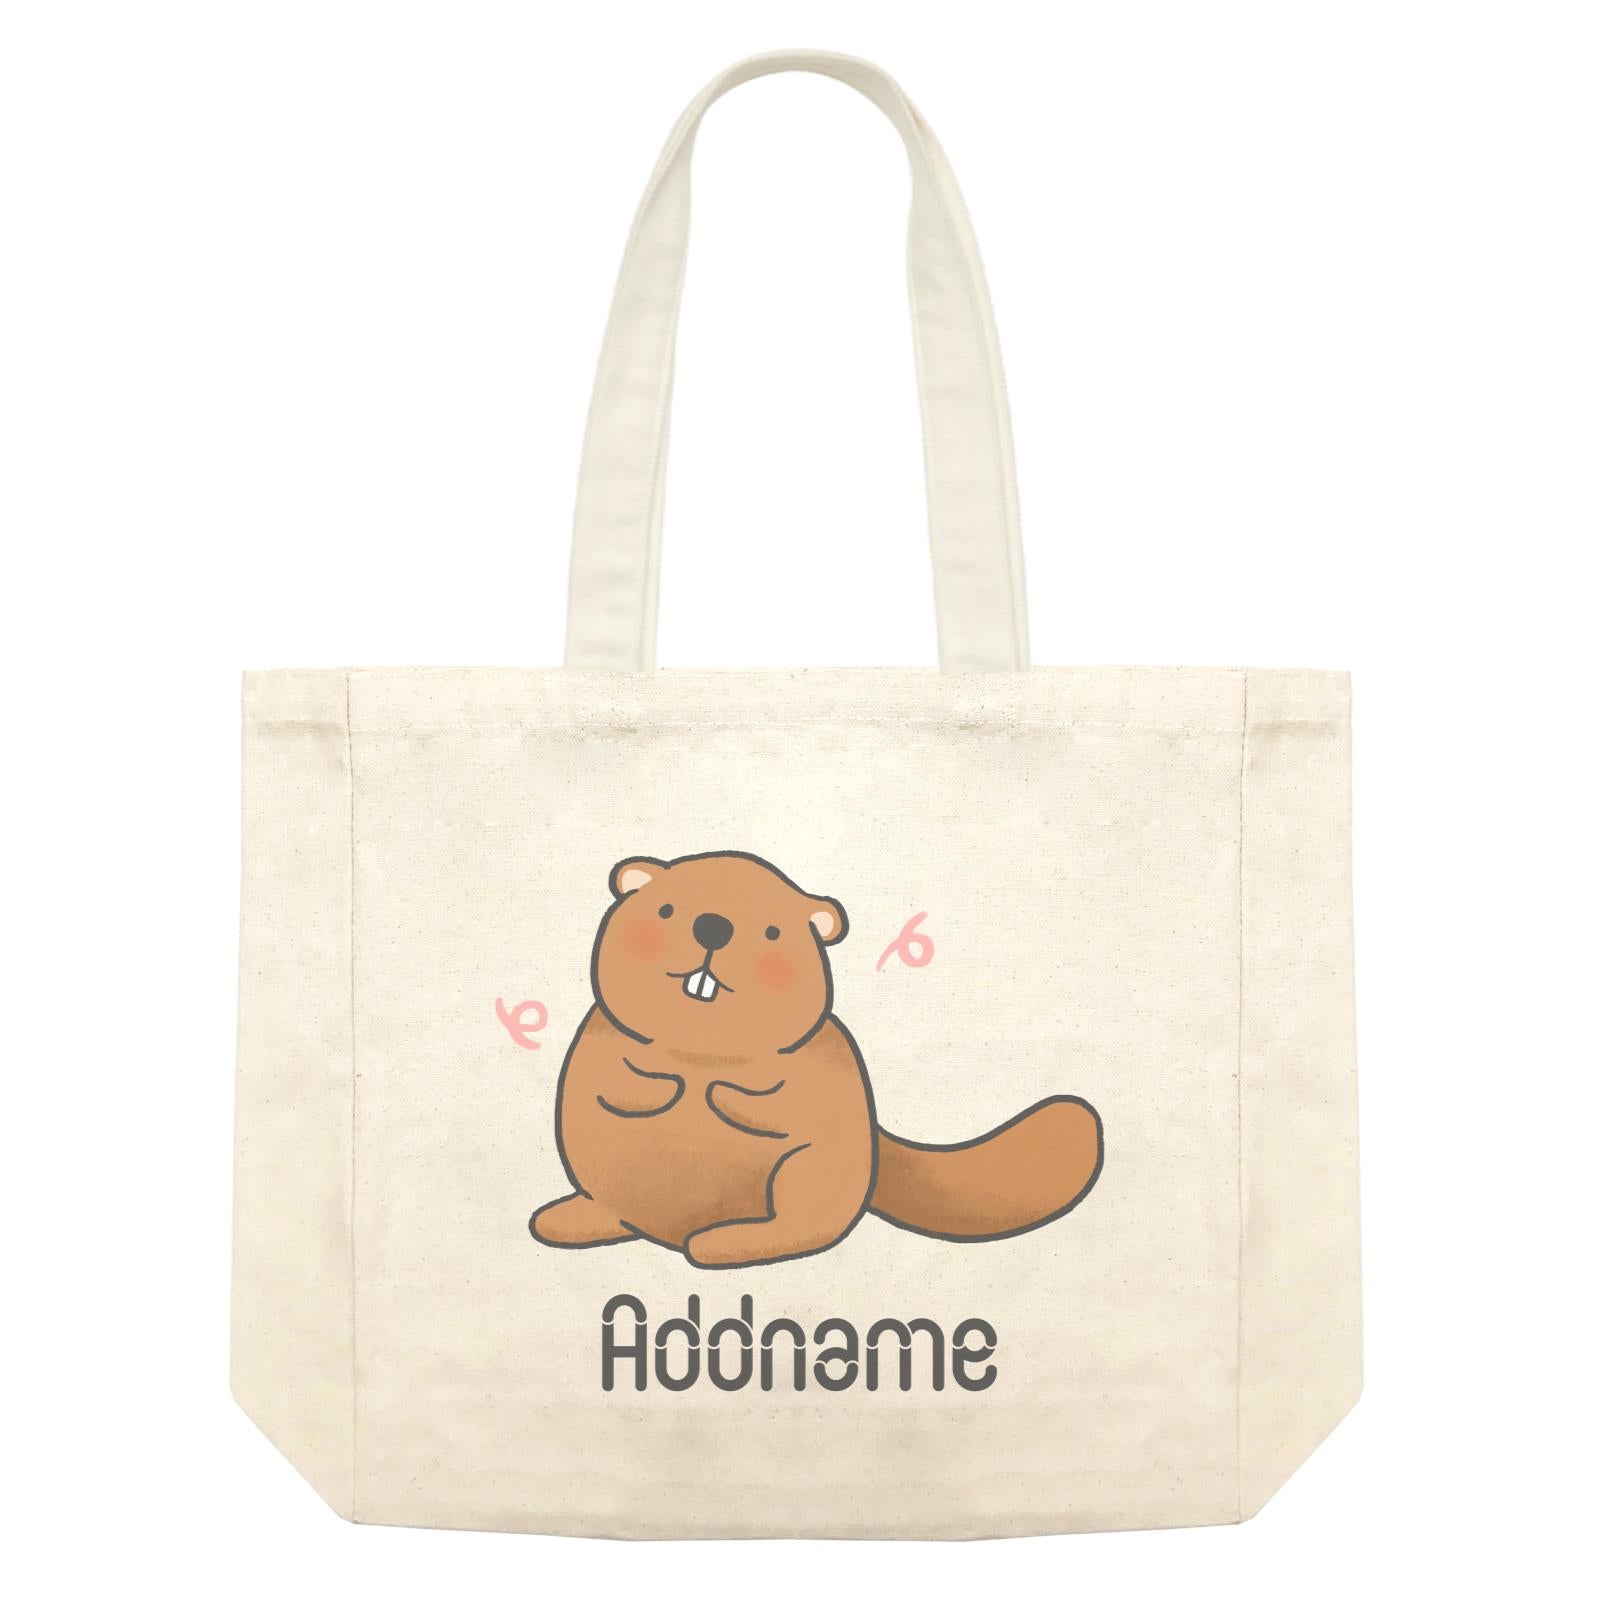 Cute Hand Drawn Style Beaver Addname Shopping Bag